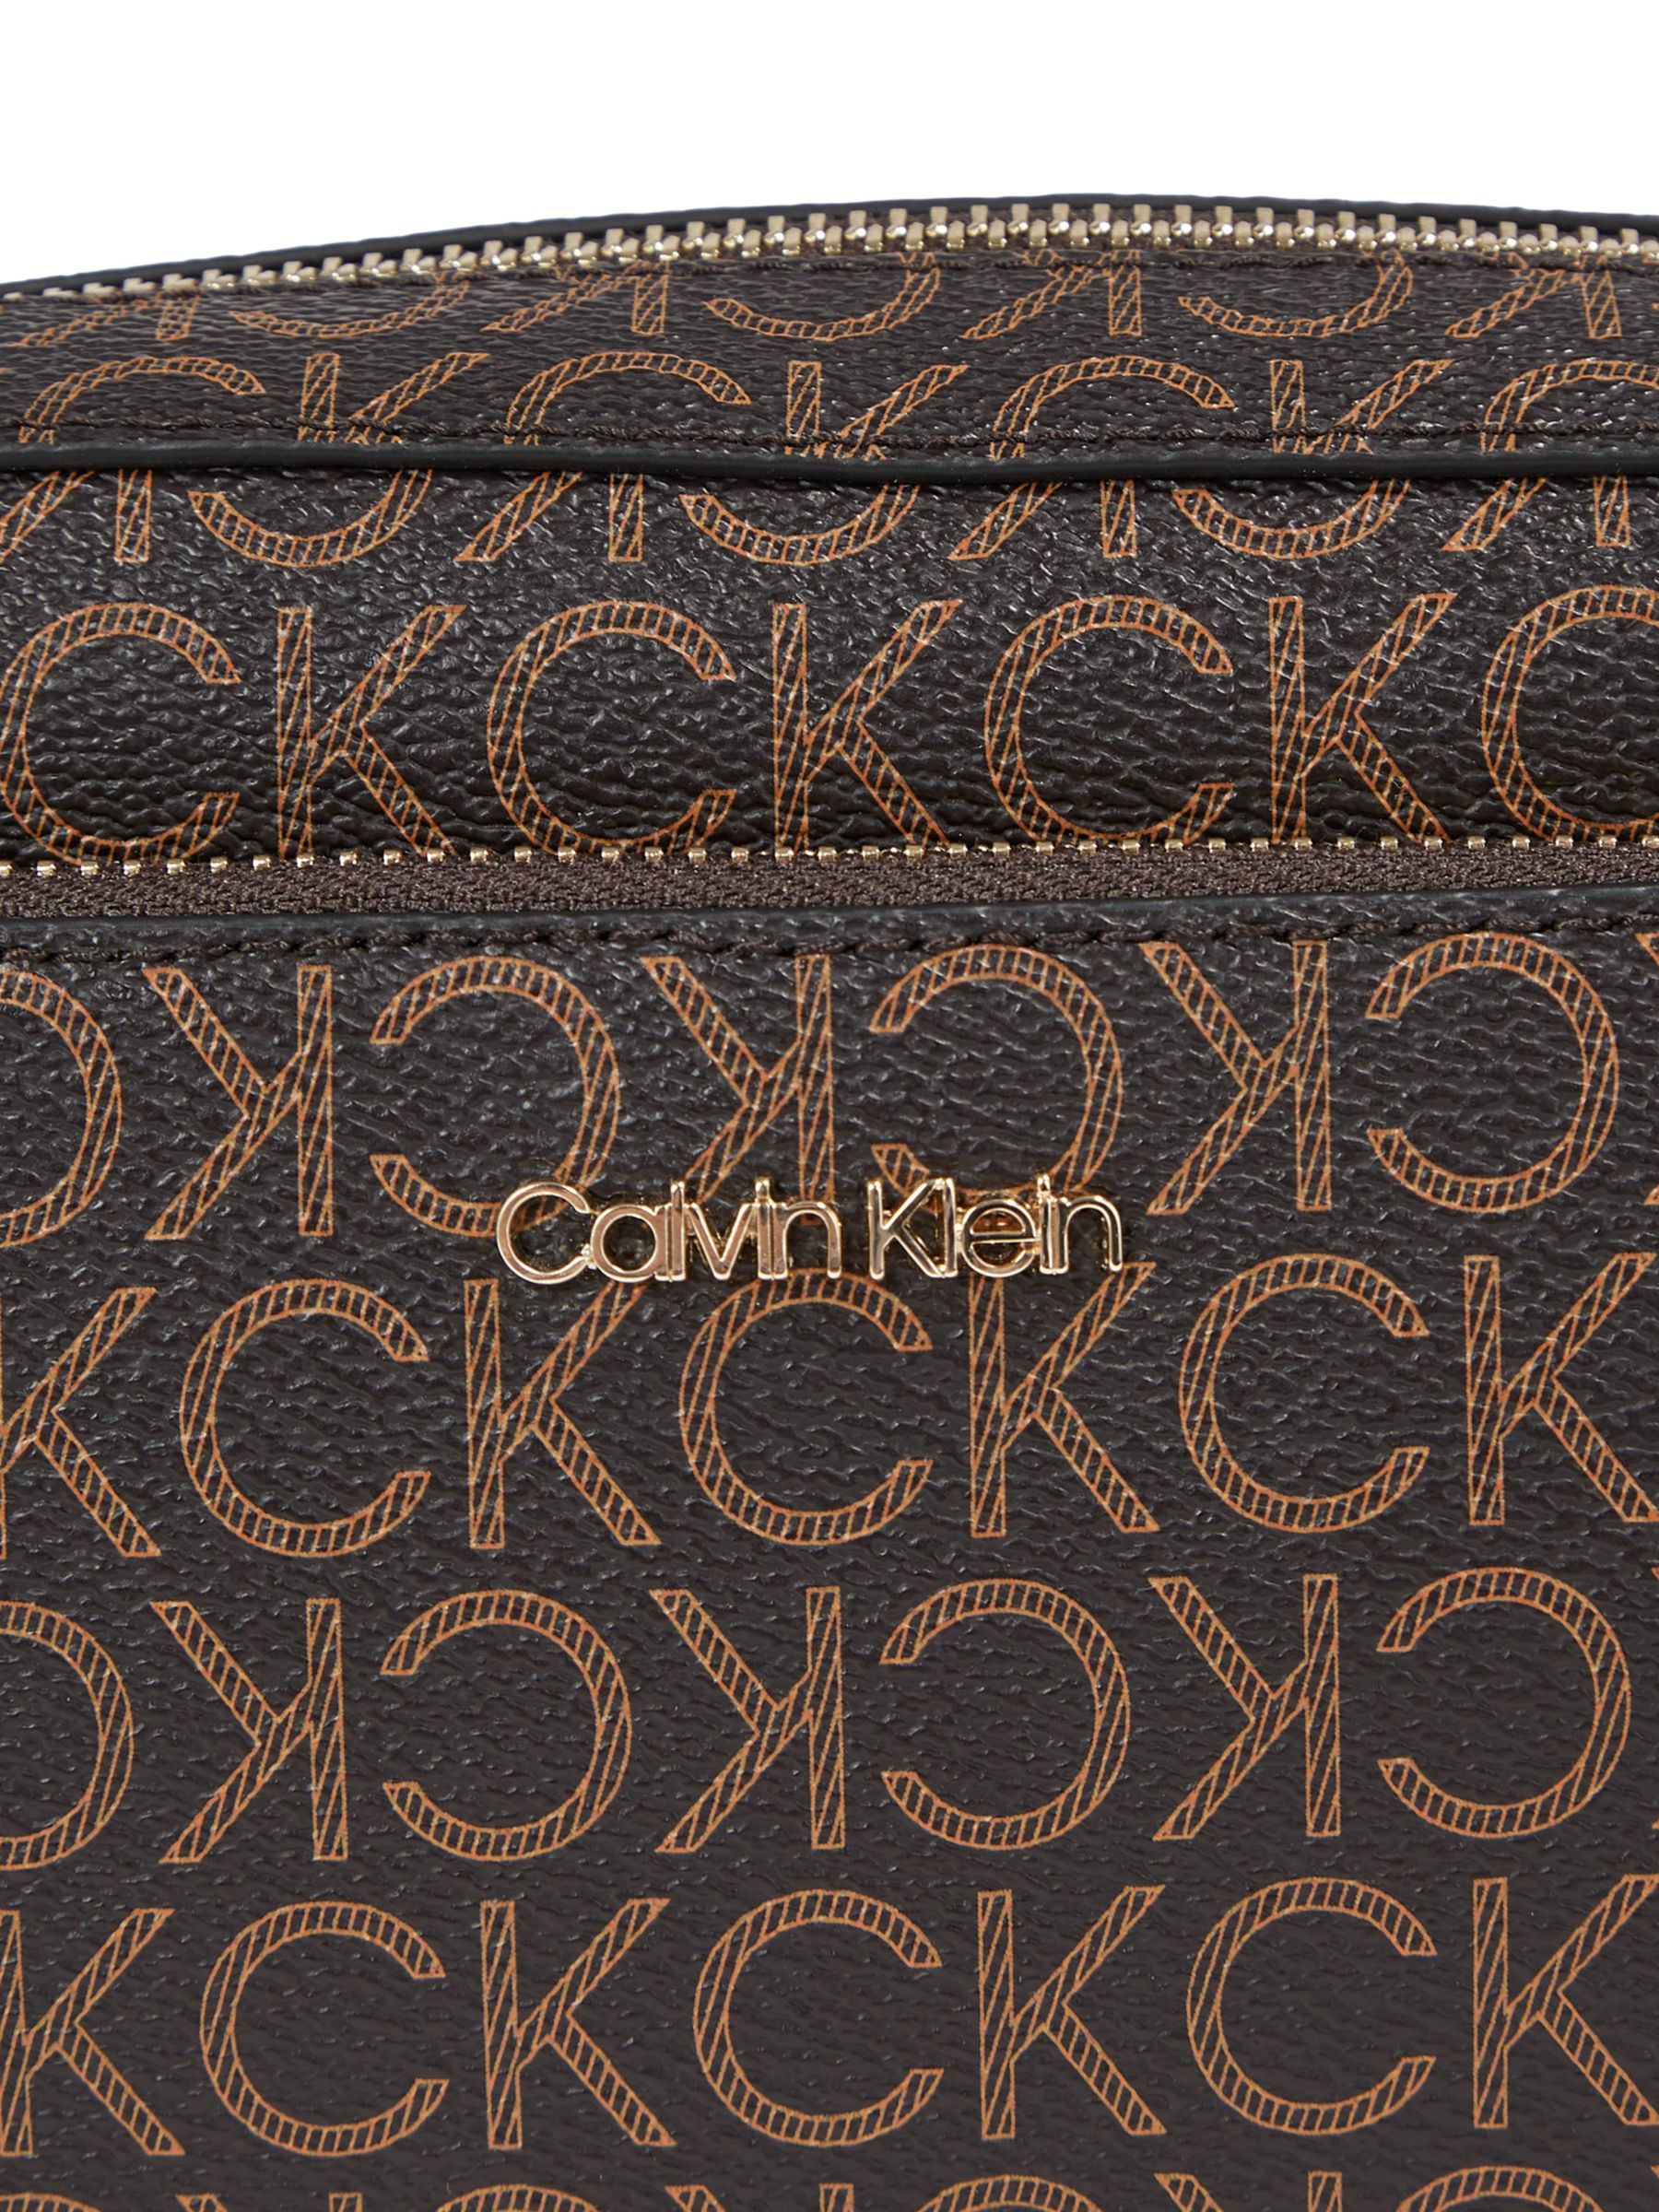 Calvin Klein Monogram Print Leather Crossbody Bag in Brown